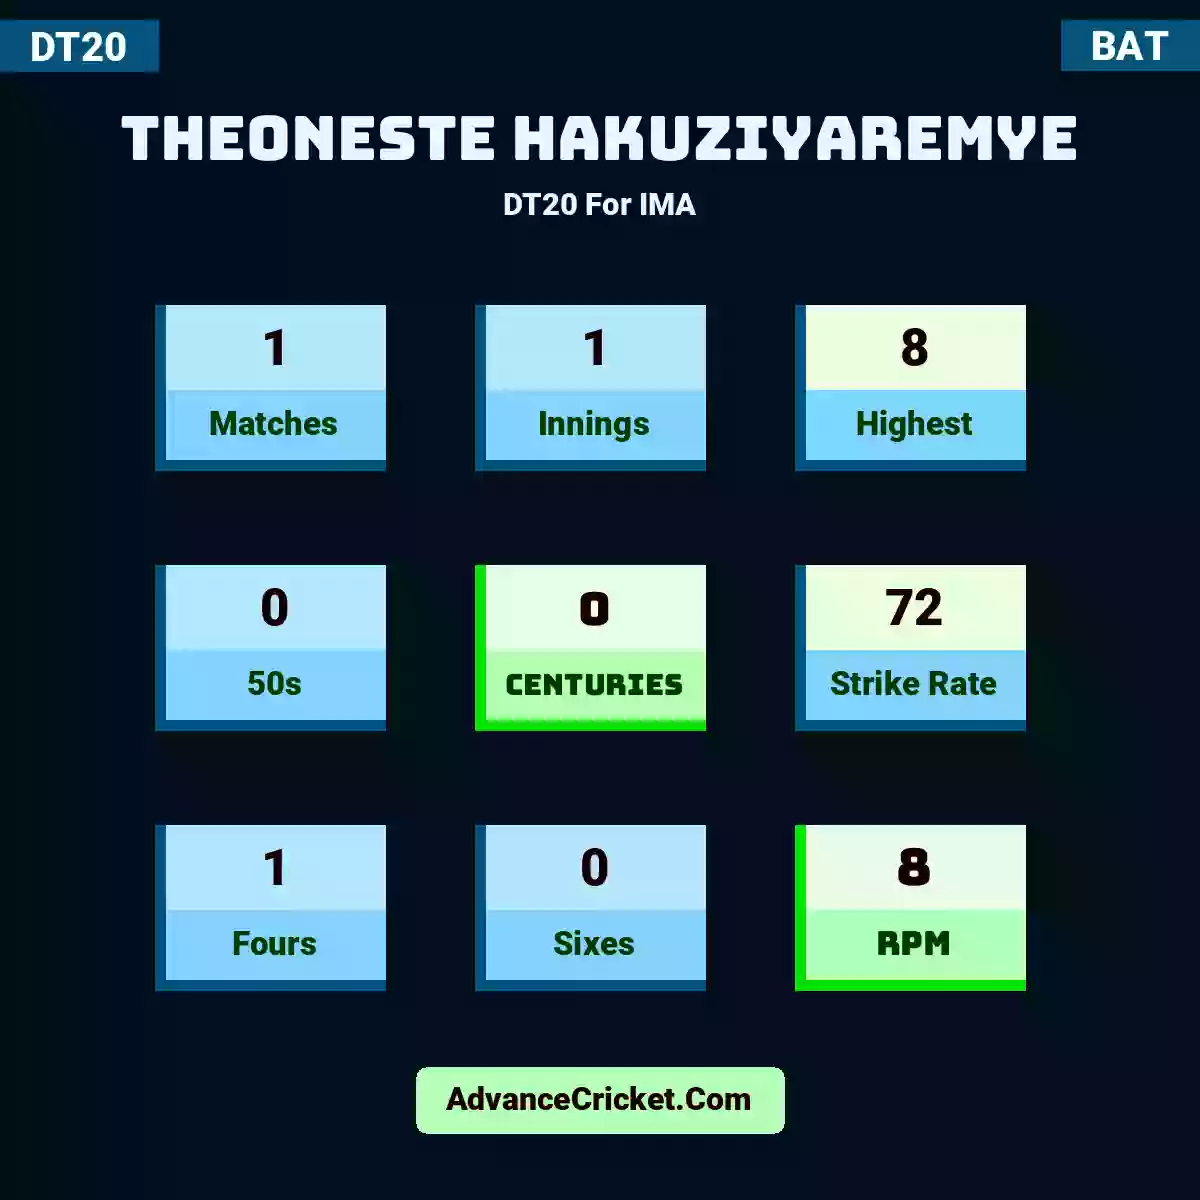 Theoneste Hakuziyaremye DT20  For IMA, Theoneste Hakuziyaremye played 1 matches, scored 8 runs as highest, 0 half-centuries, and 0 centuries, with a strike rate of 72. T.Hakuziyaremye hit 1 fours and 0 sixes, with an RPM of 8.